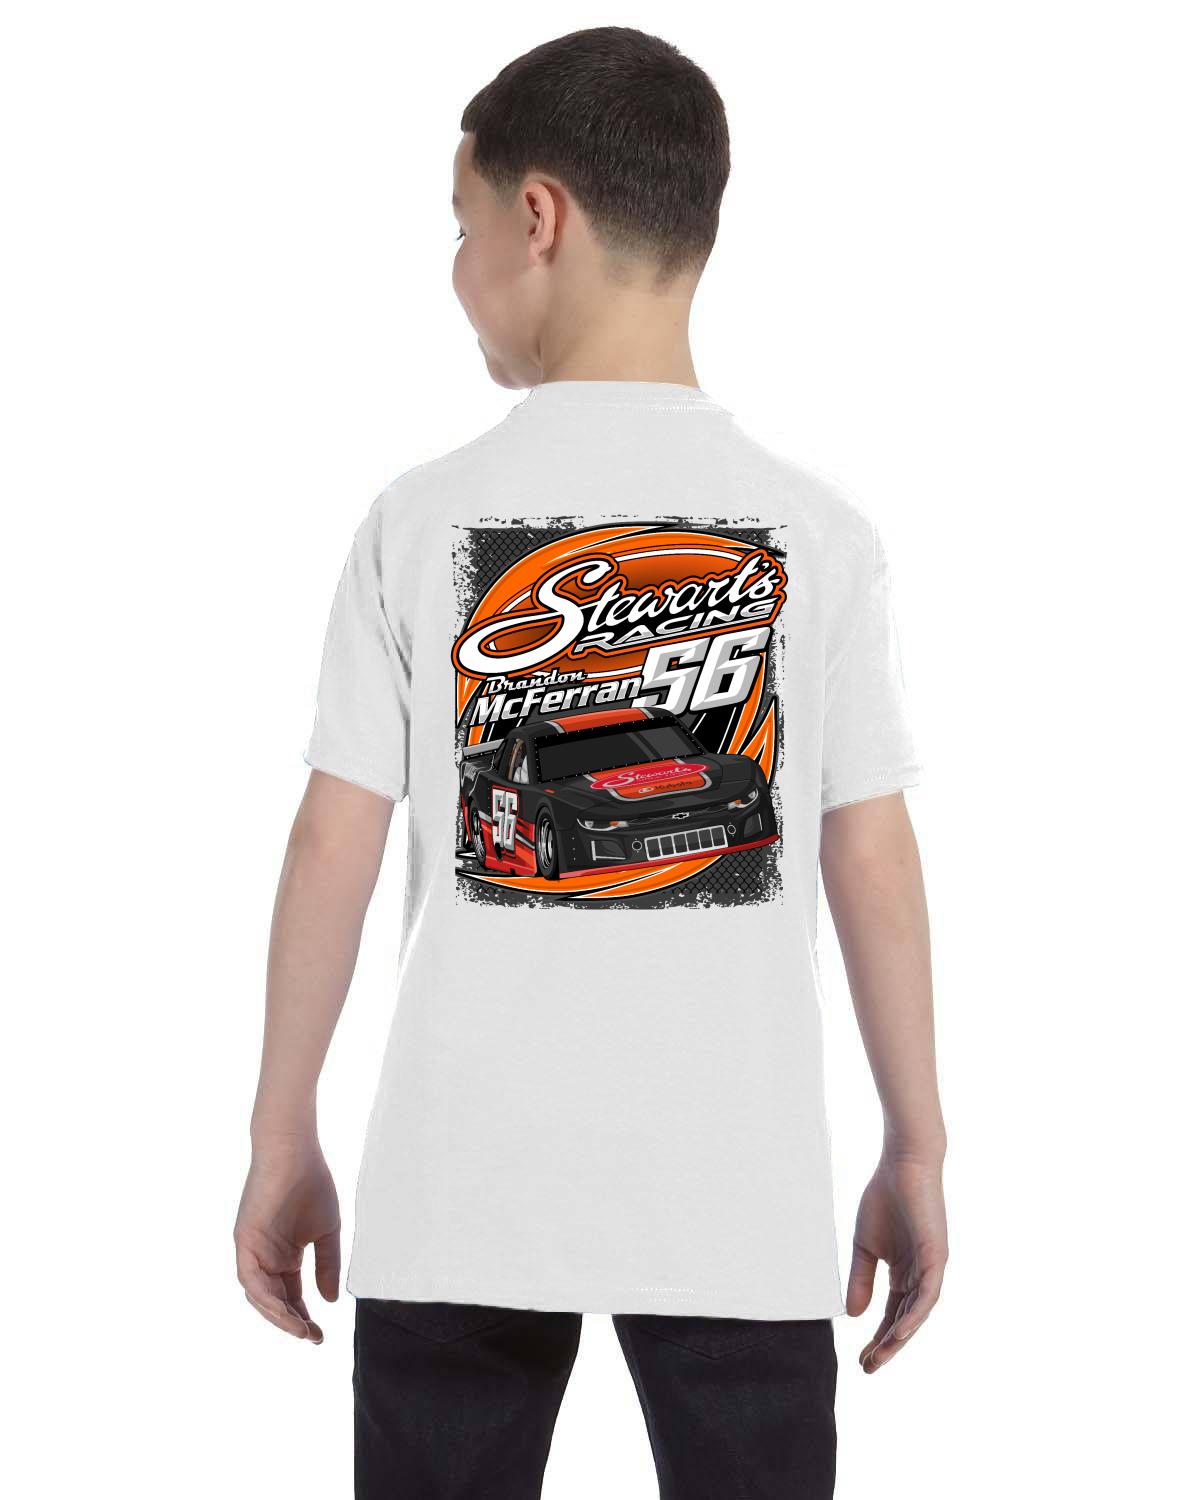 Stewart's Racing Brandon McFerran 56 Youth tshirt